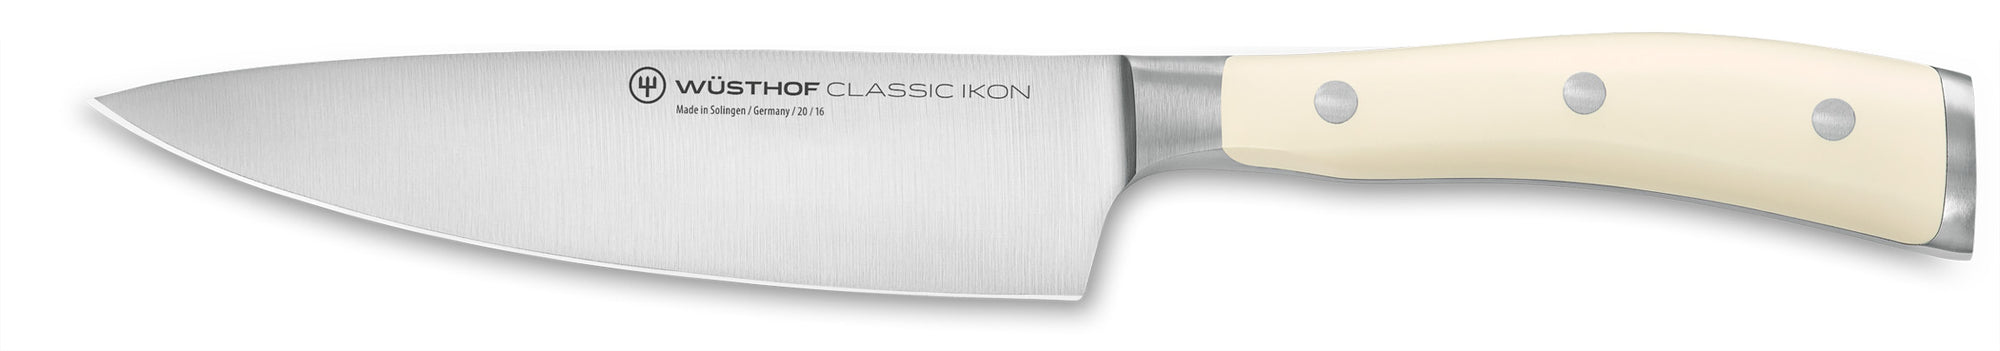 Wusthof Classic IKON Creme Chef's Knife, 6-inch (16cm) - 4596-6/16 Canada